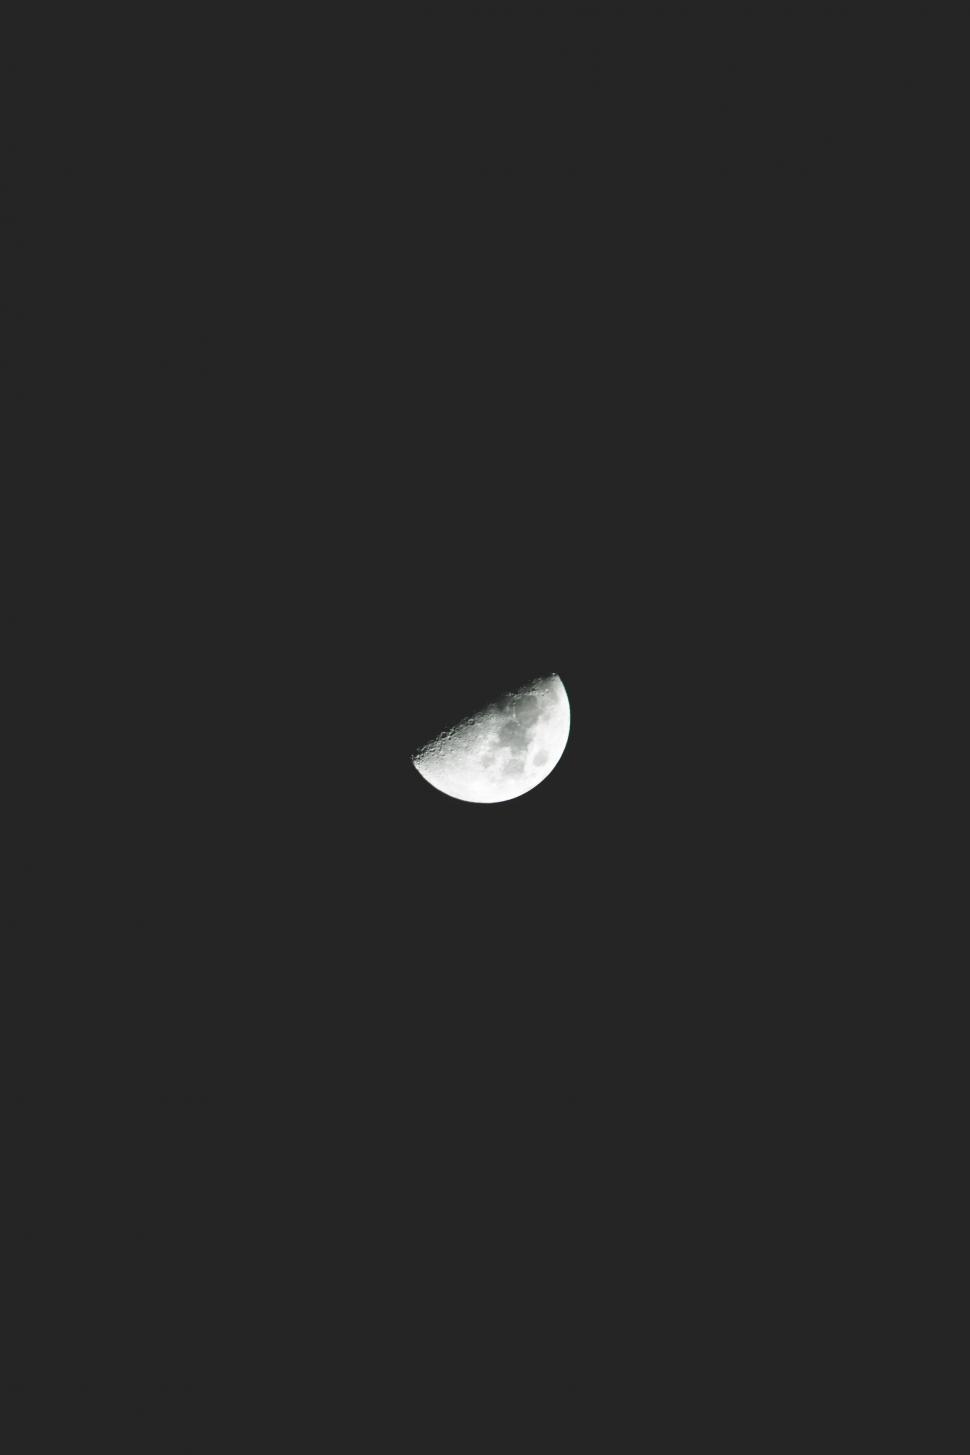 Free Image of Half moon in a dark night sky 